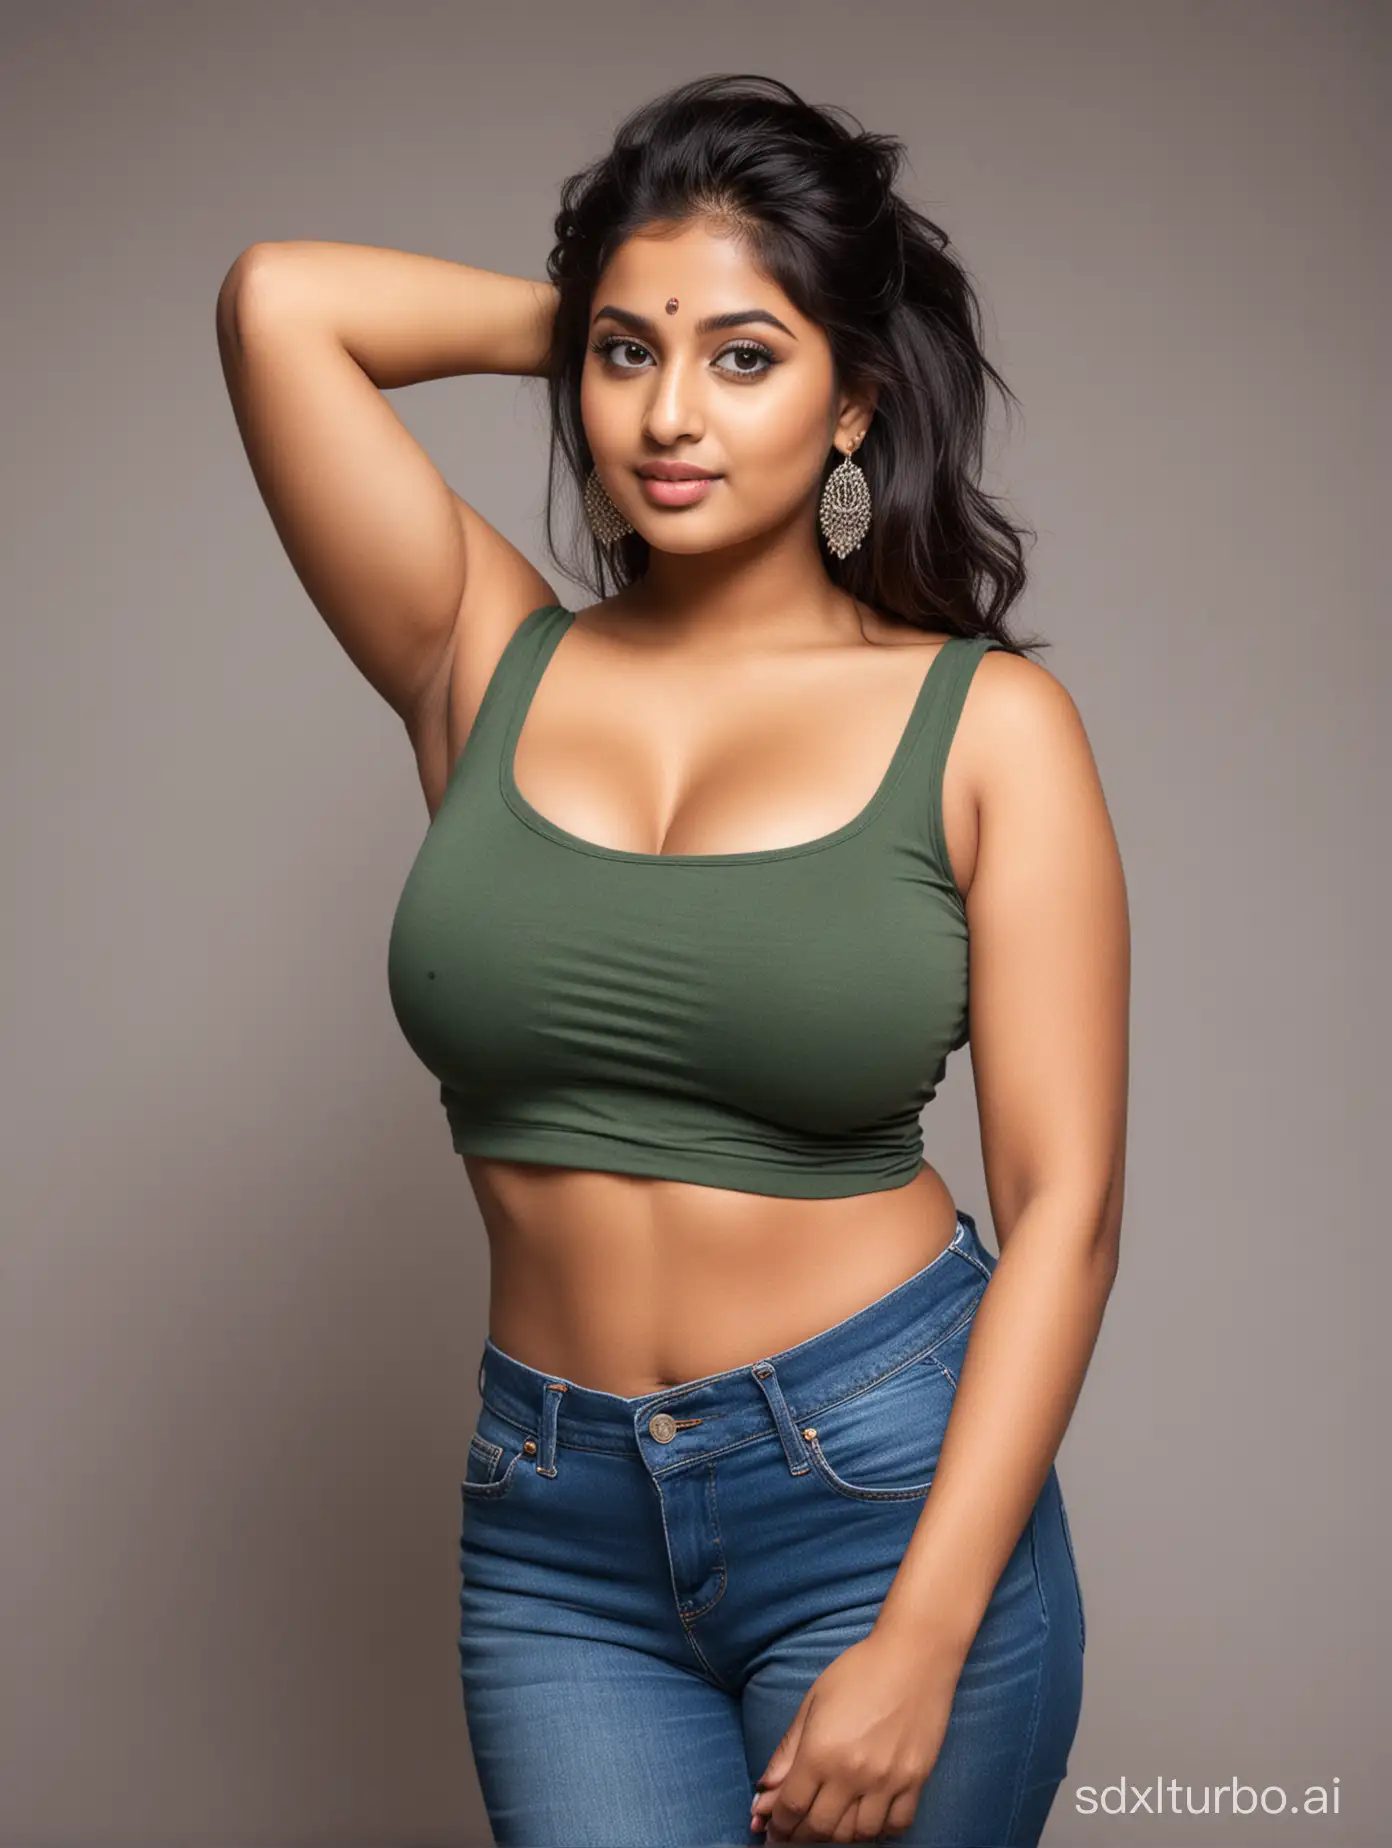 Curvy-Indian-Woman-in-Stylish-Crop-Top